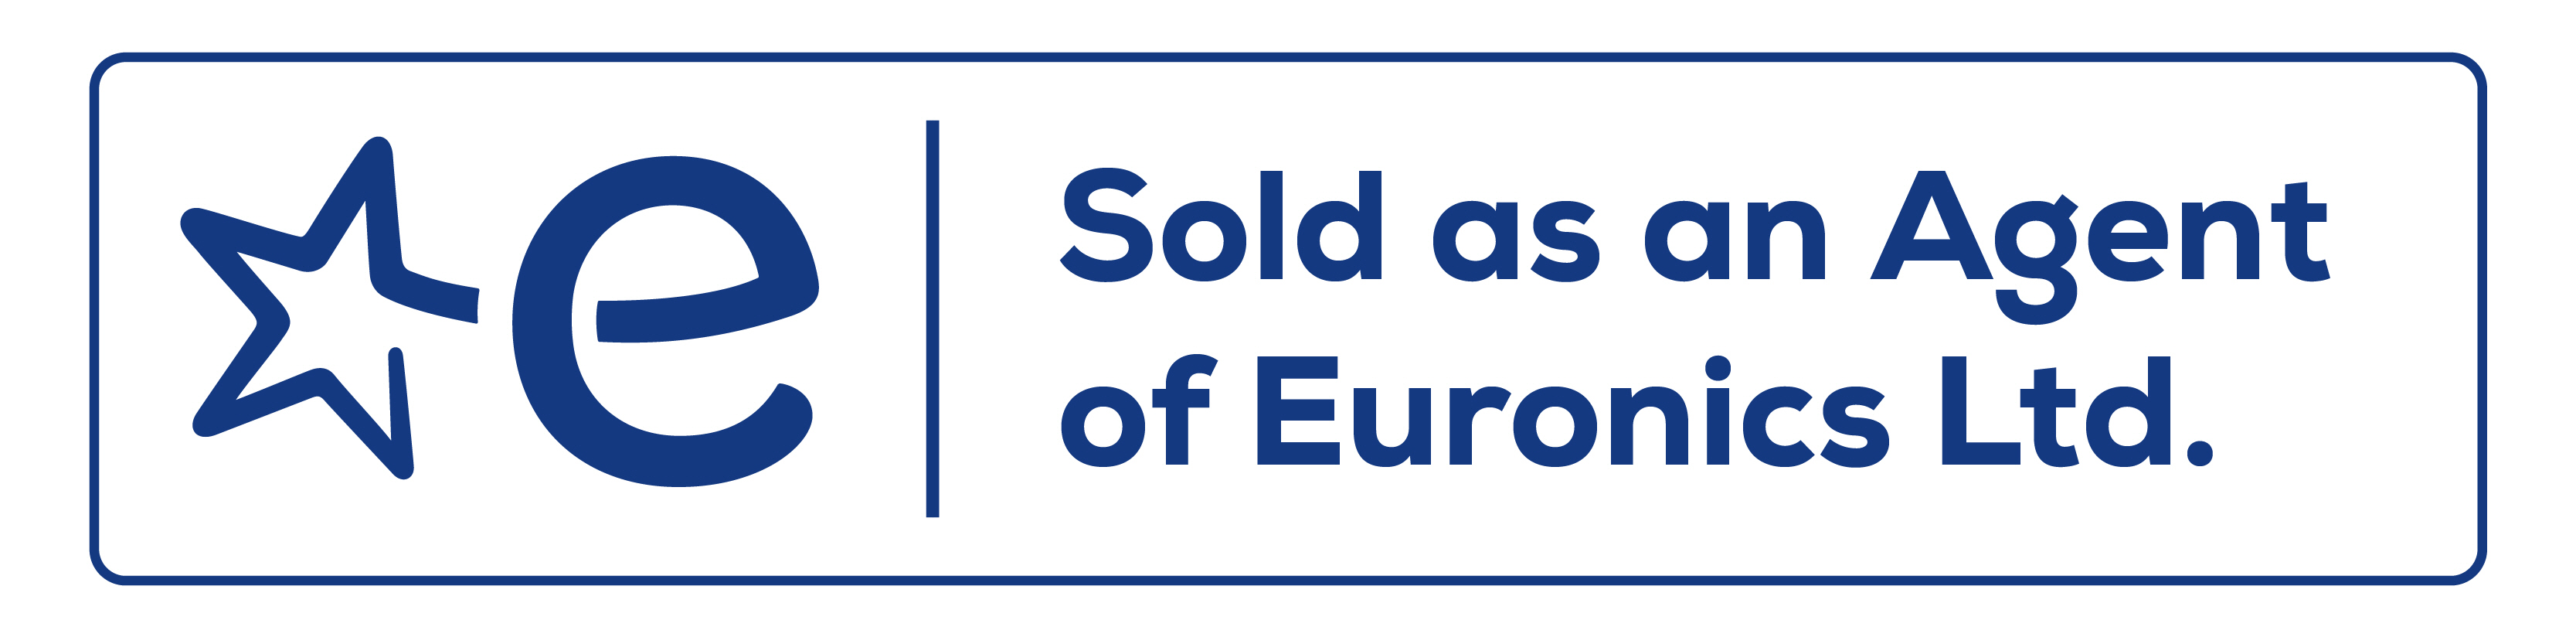 Sold as an Agent of Euronics Ltd